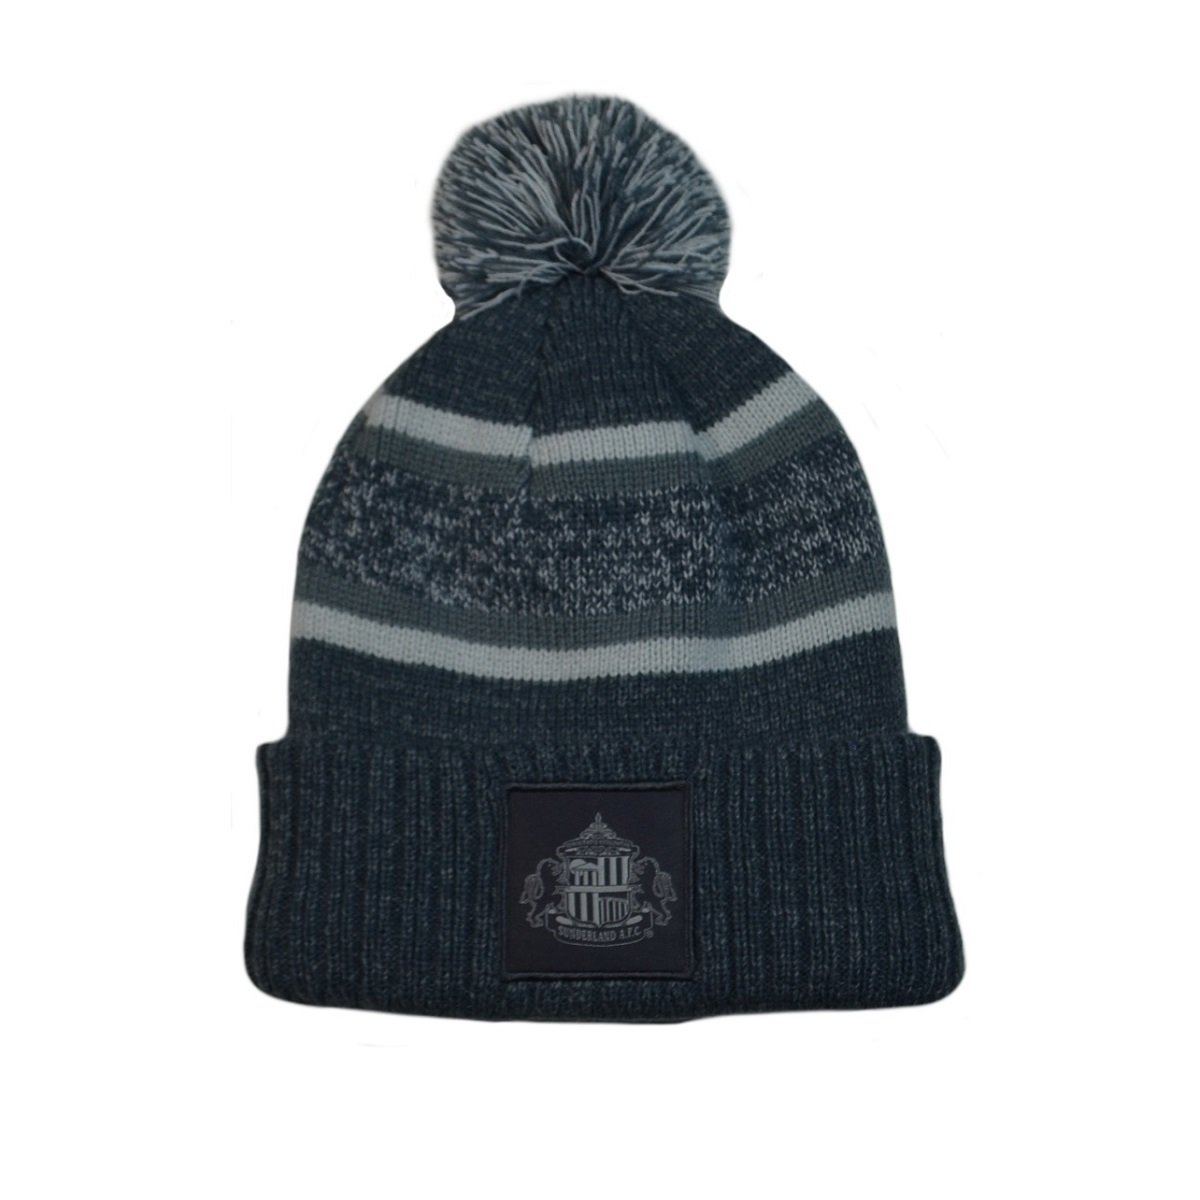 Buy the Nevis Grey Hat online at Sunderland AFC Store